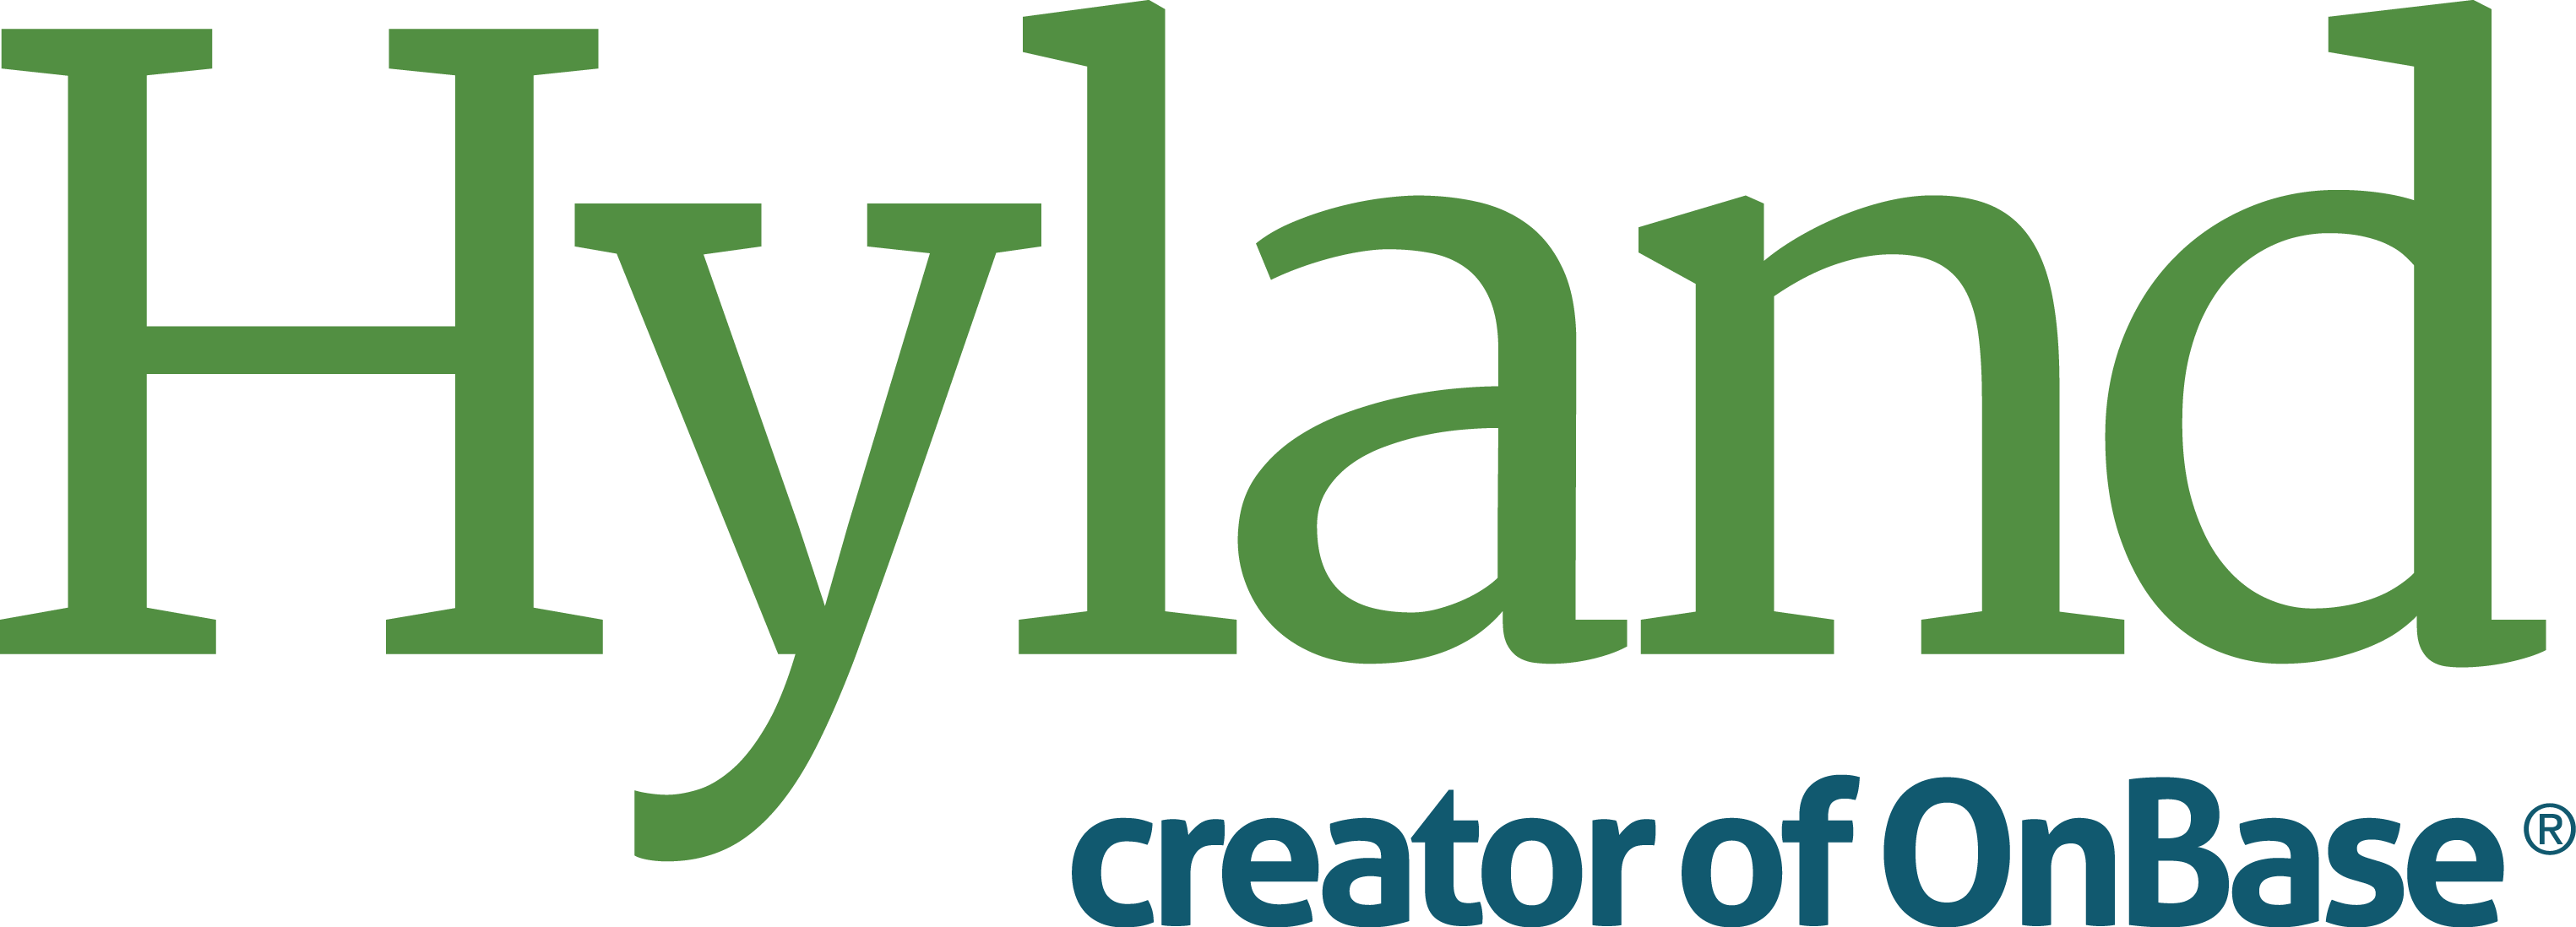 Hyland Software logo